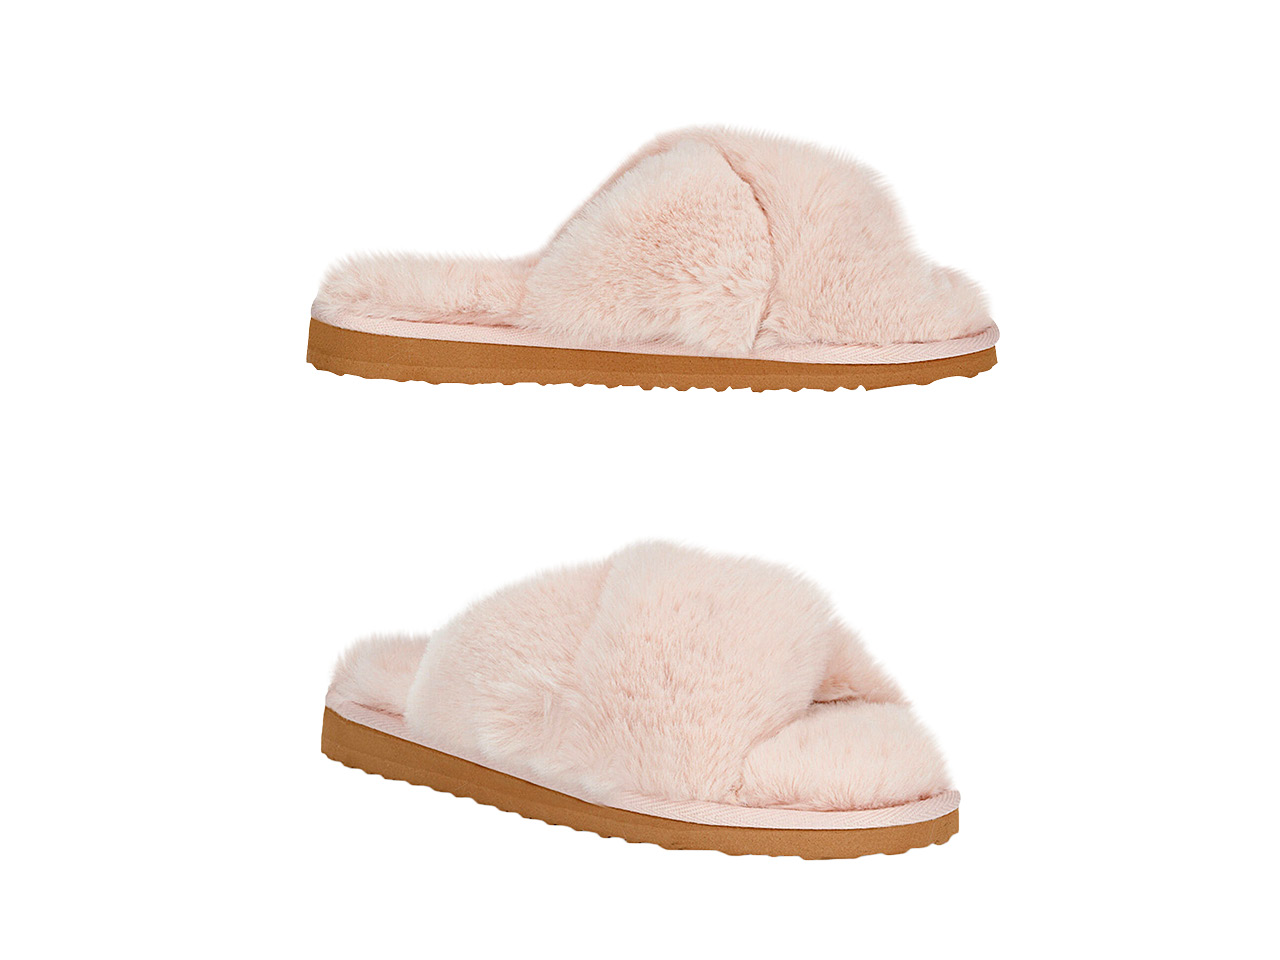 Fuzzy pair of beige slip-on slippers.